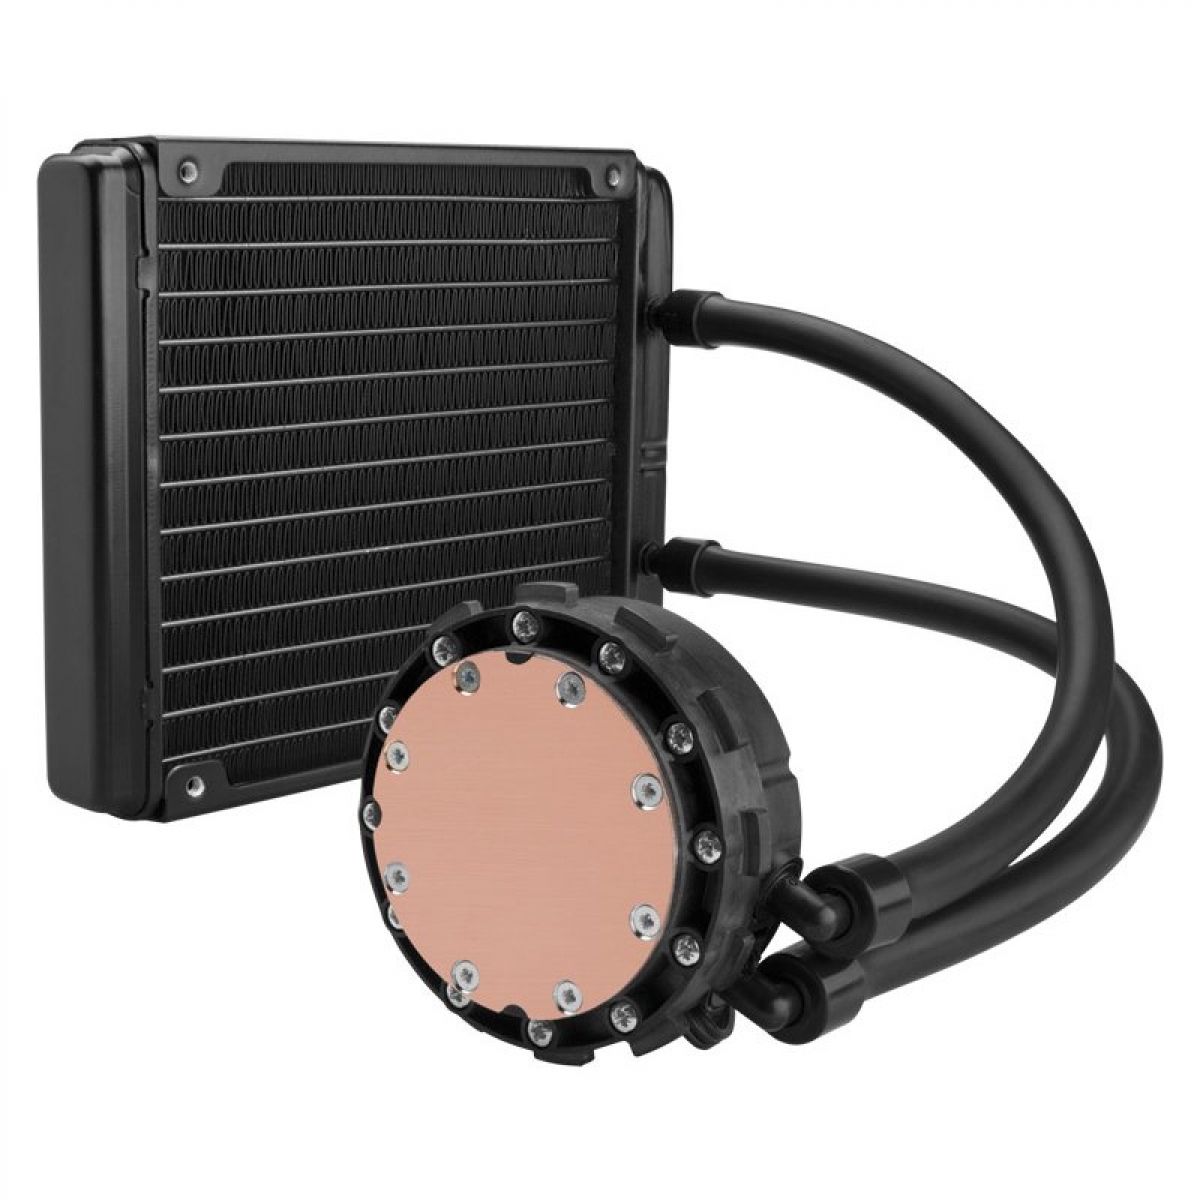 Water cooler Corsair H90, 140mm, Intel-AMD, CW-9060013-WW